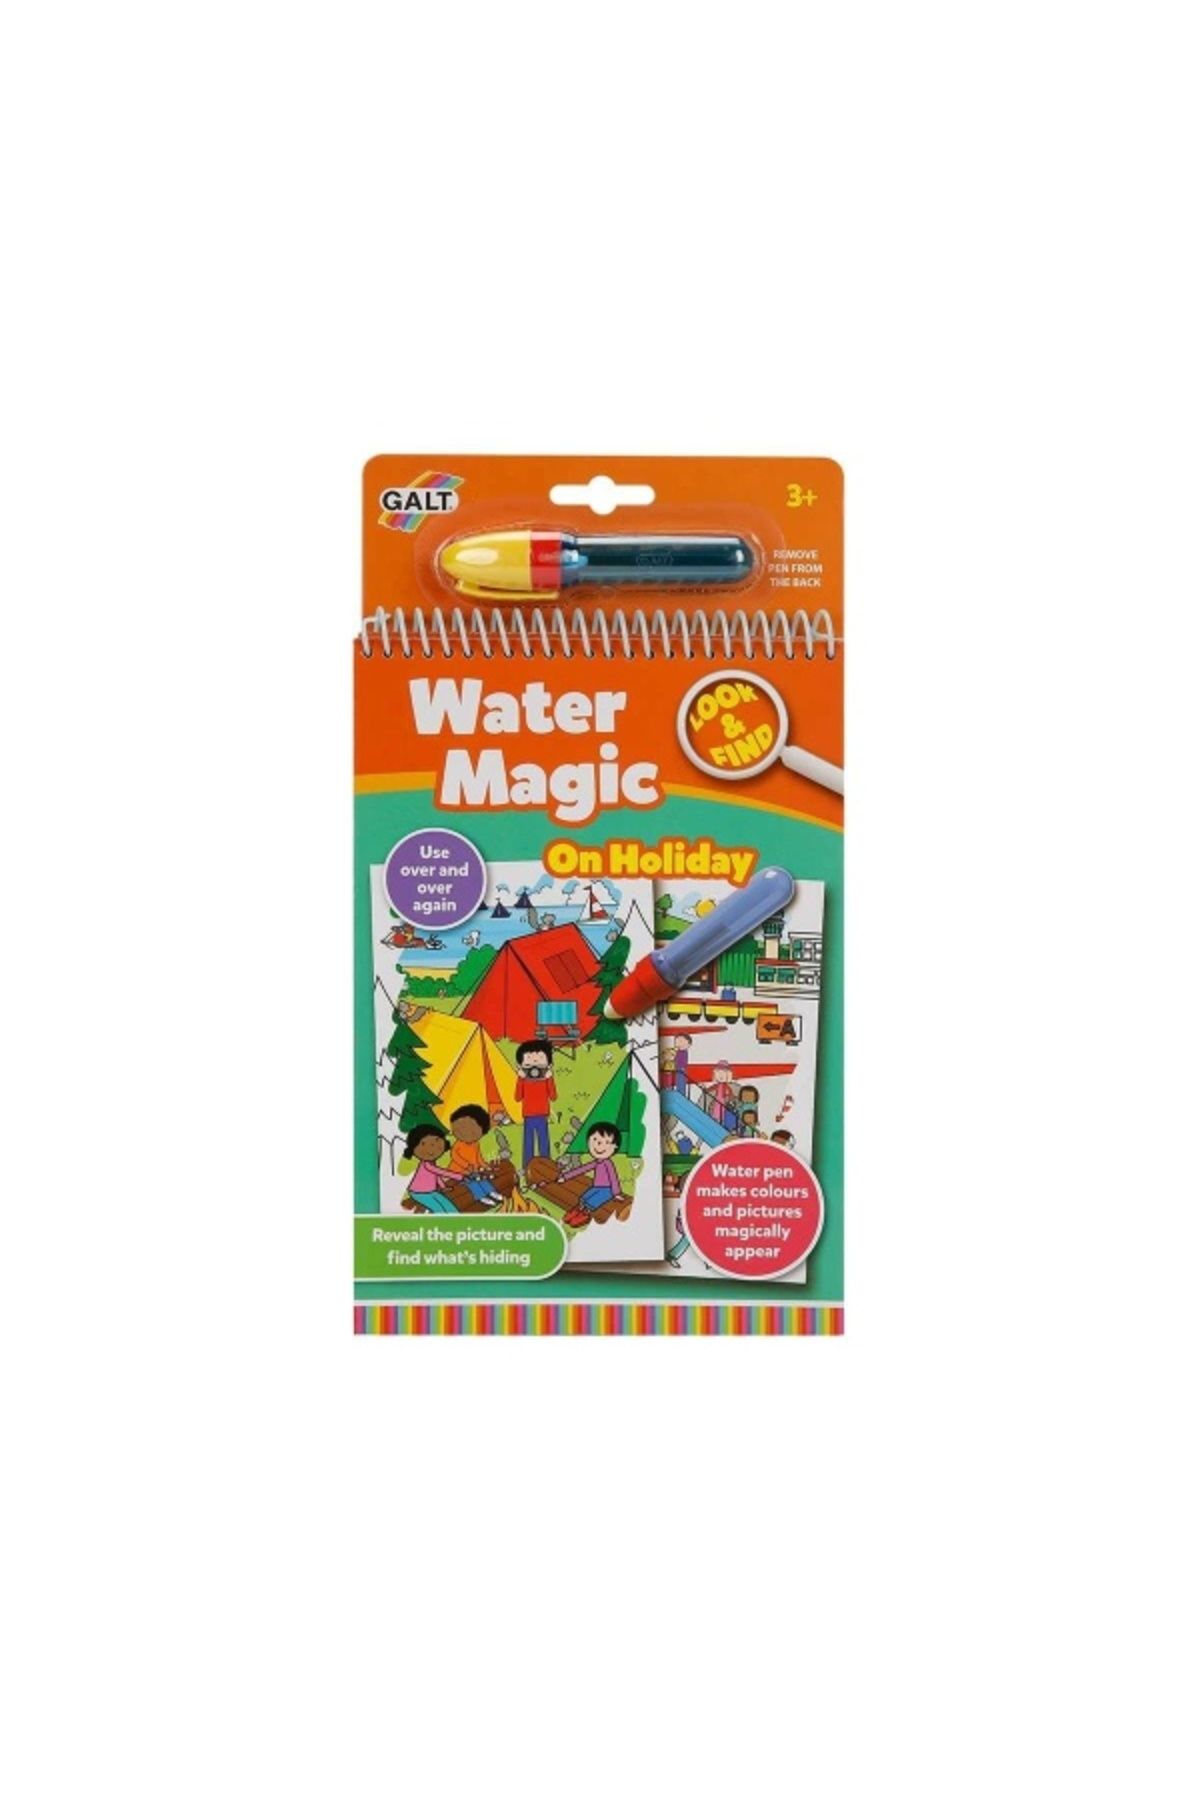 Galt Toys Water Magic Sihirli Kitap On Holiday 3 Yaş